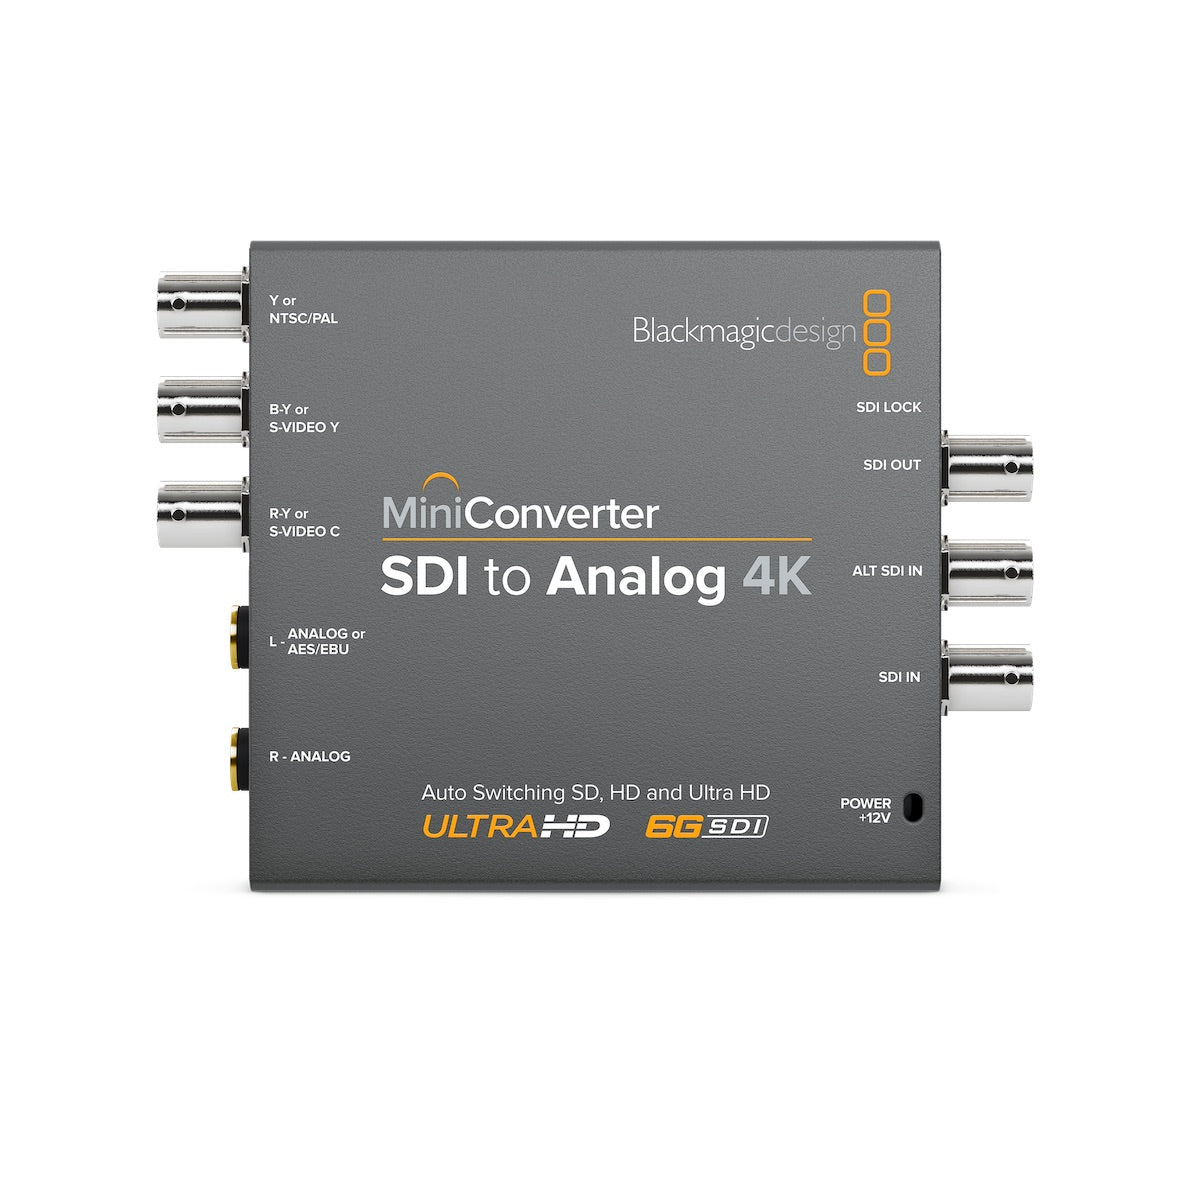 Blackmagic Design Mini Converter SDI to Analog 4K, front